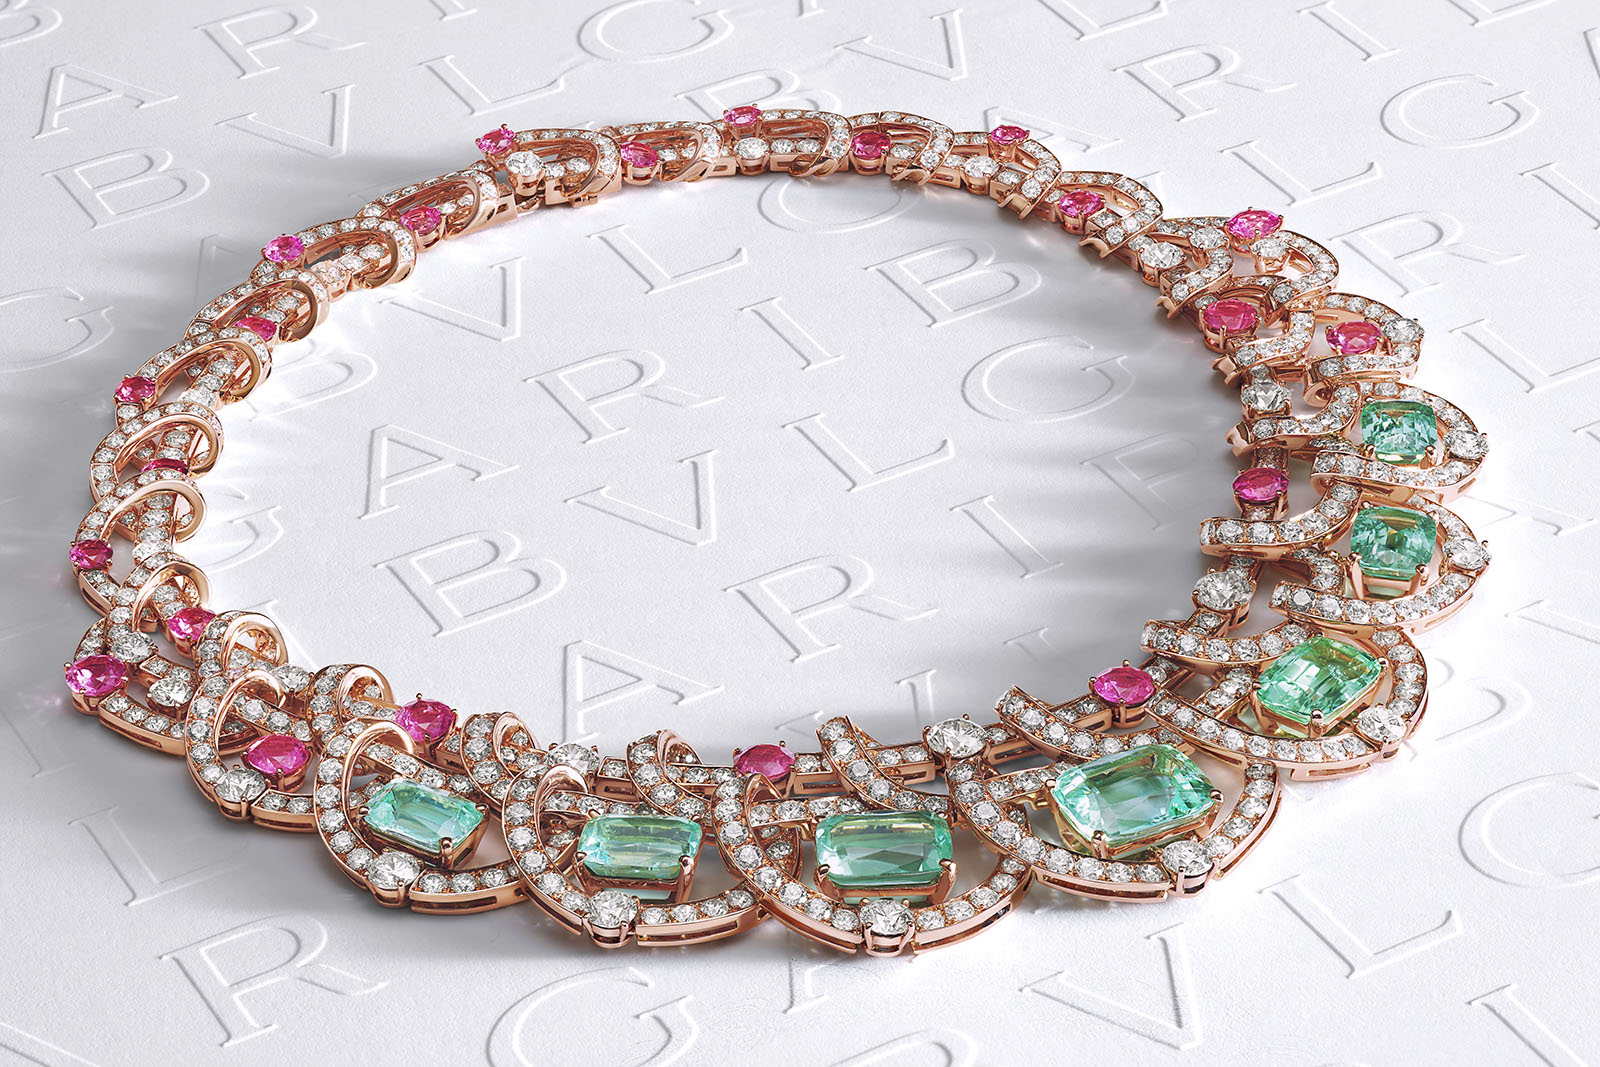 Bulgari Colour Journeys Paraiba Tourmaline High Jewellery necklace in pink gold with 7 cushion Paraiba tourmalines (36.81 ct) 22 round pink tourmalines (12.15 ct), 25 round brilliant-cut diamonds (D-F VVS 11.78 ct) and pavé-set diamonds (D-F IF-VVS 35.24 ct)